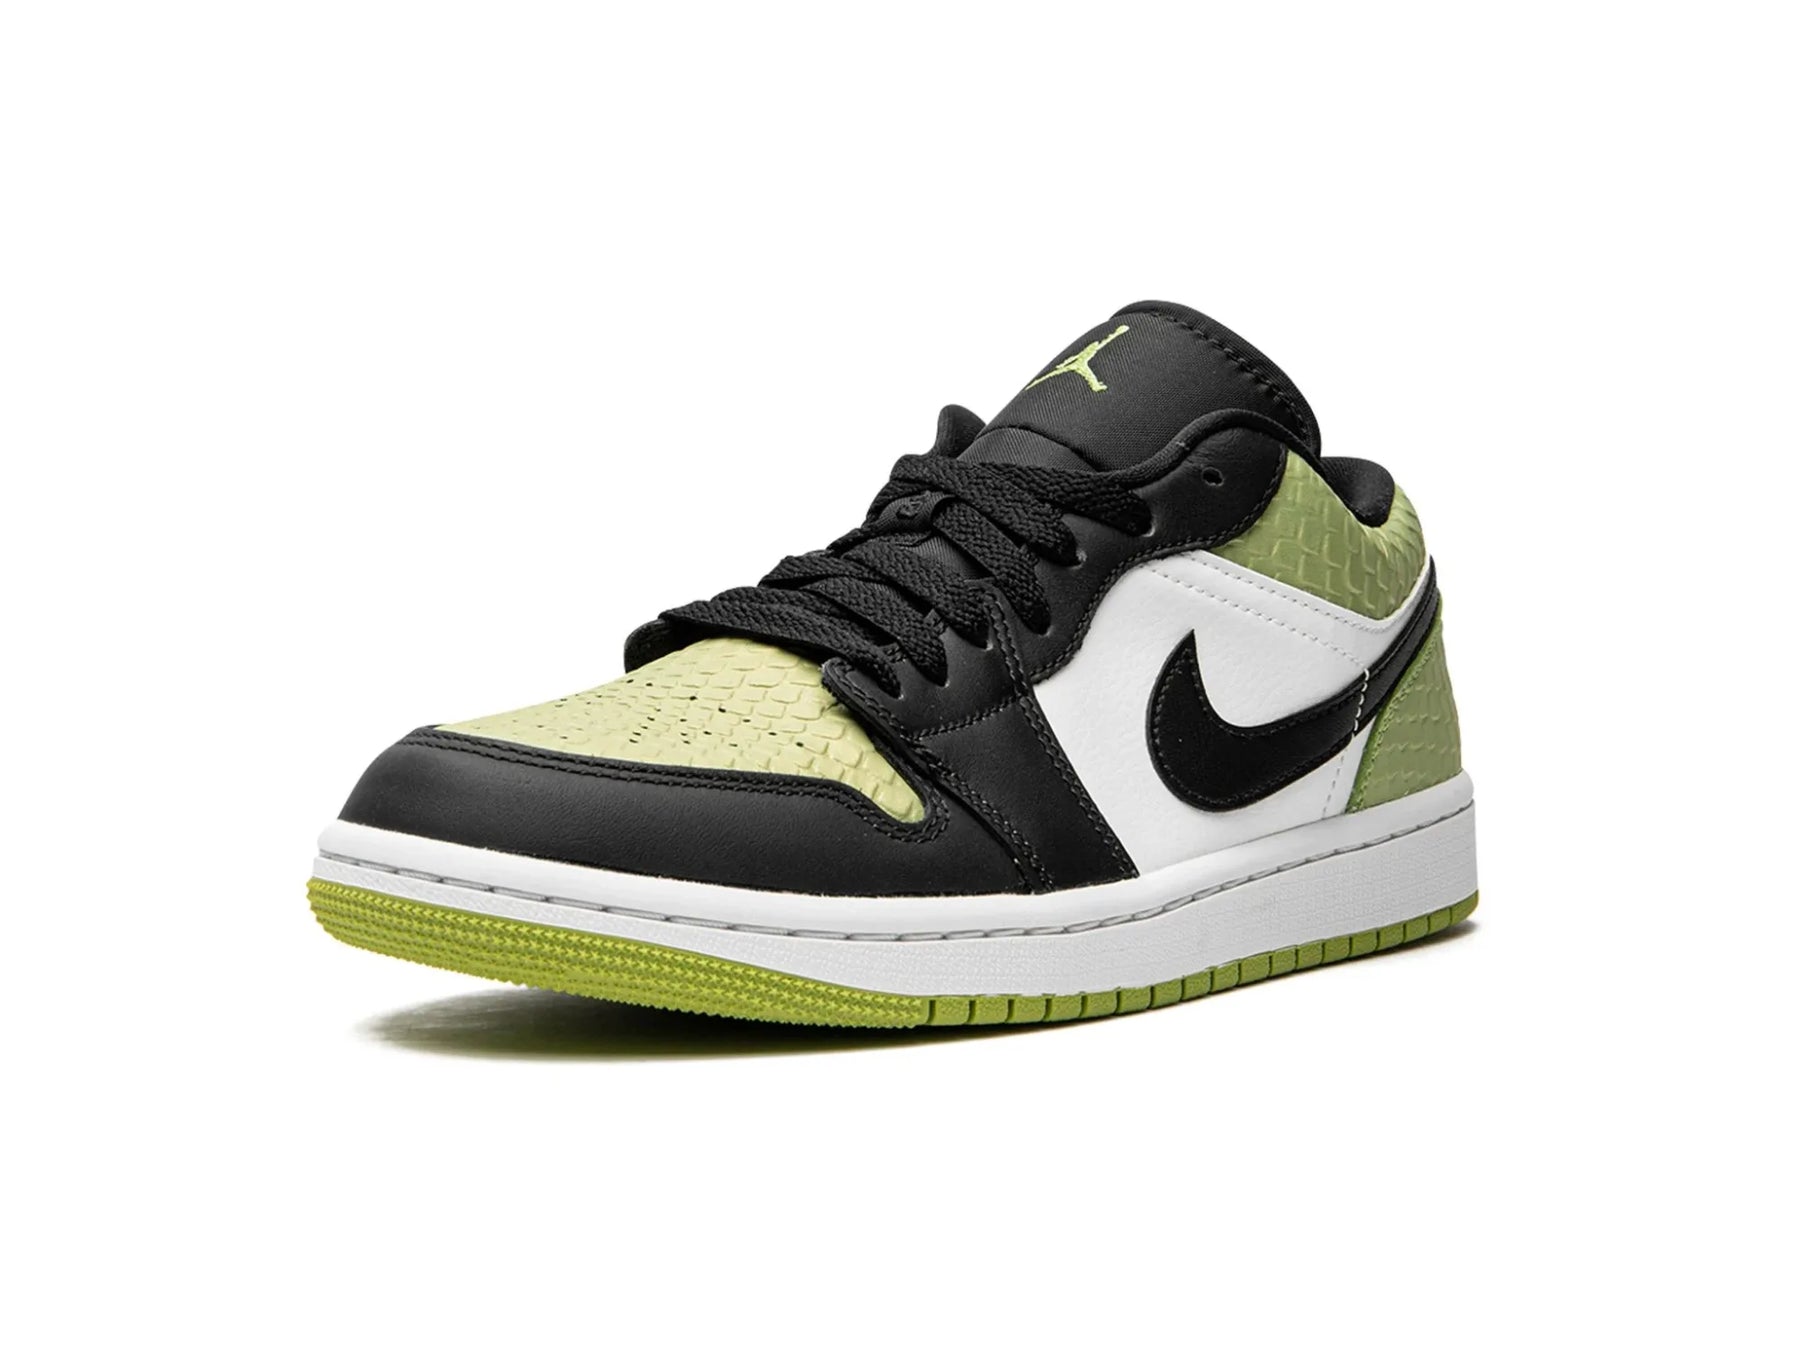 Nike Air Jordan 1 Low "Vivid Green Snakeskin" - street-bill.dk